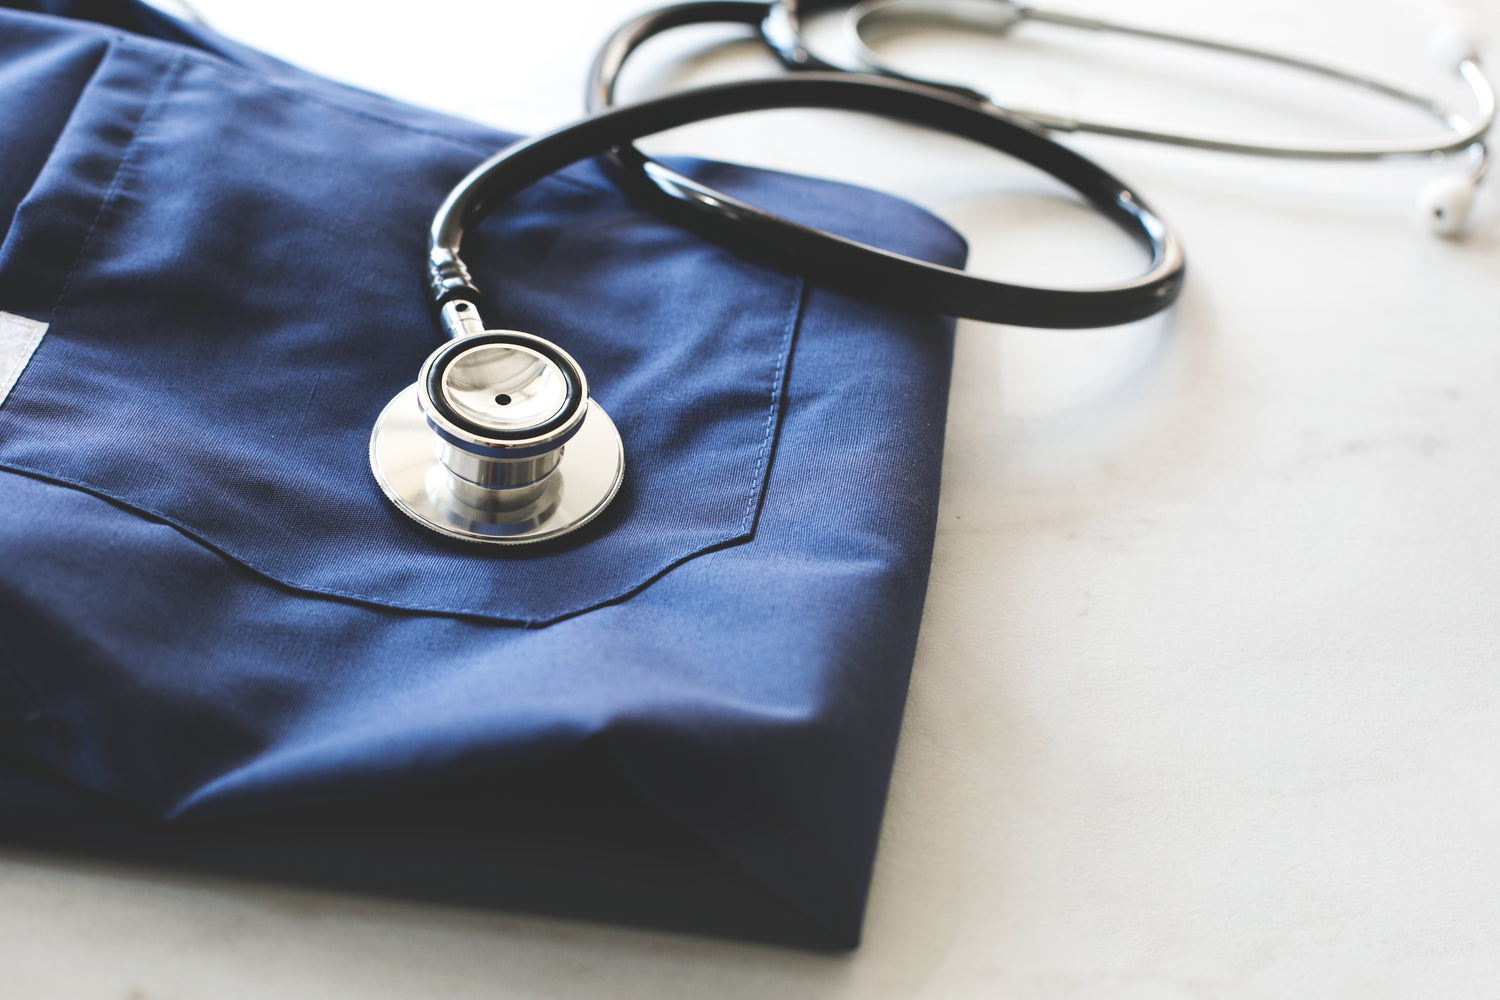 Stethoscope lying on scrubs - the diagnosis